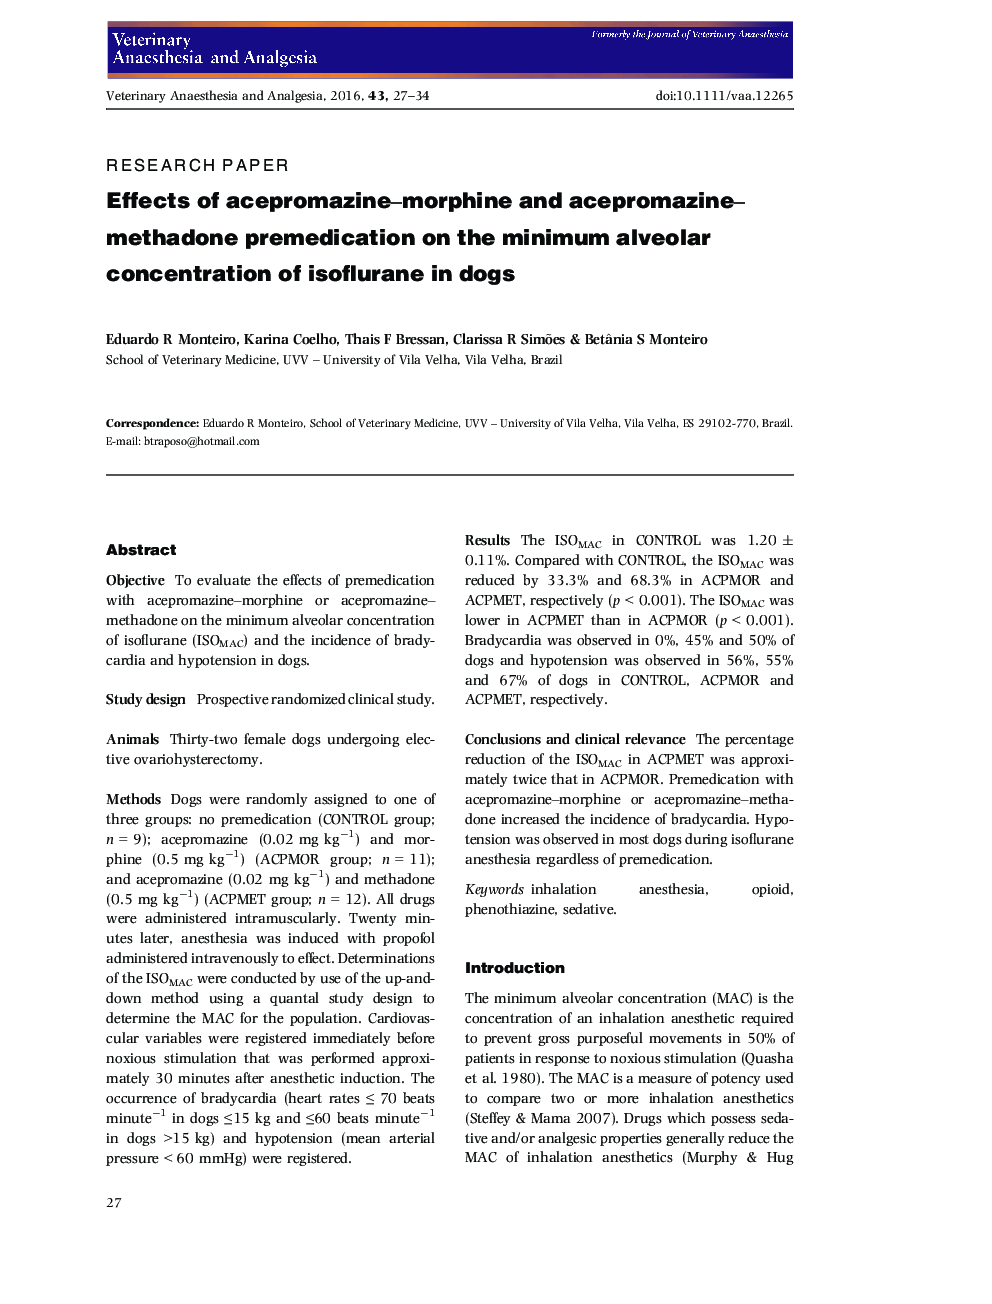 Effects of acepromazine-morphine and acepromazine-methadone premedication on the minimum alveolar concentration of isoflurane in dogs